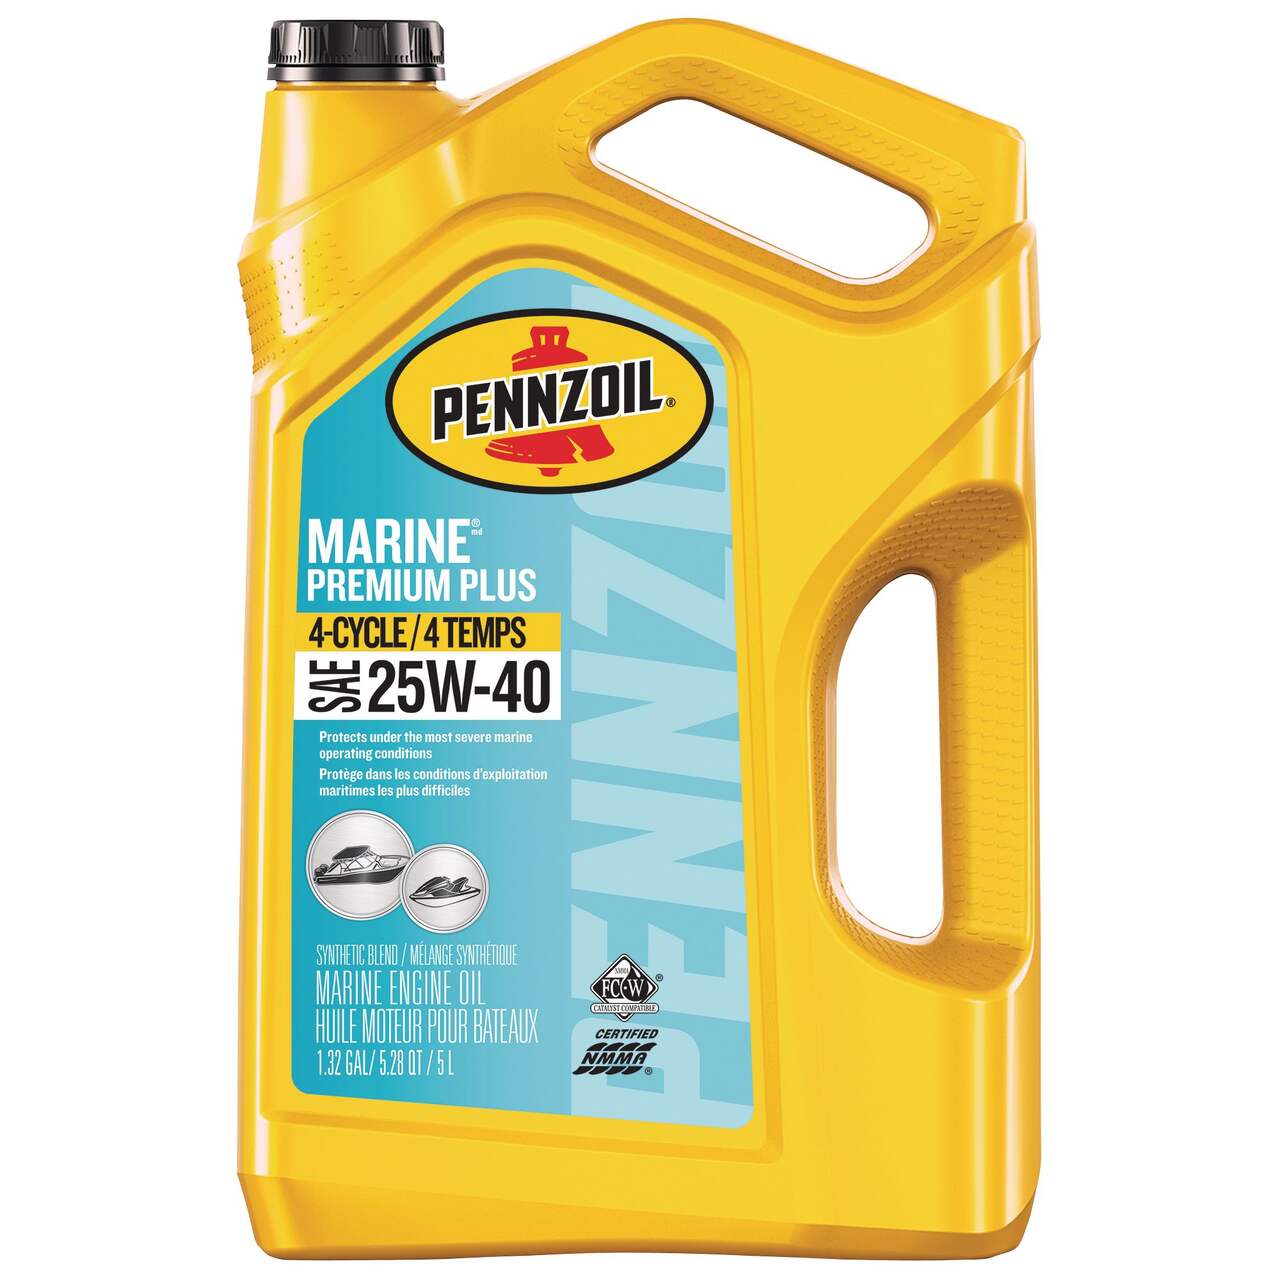 Pennzoil Marine Premium Plus 25W-40 4-Cycle Engine Oil, 5-L